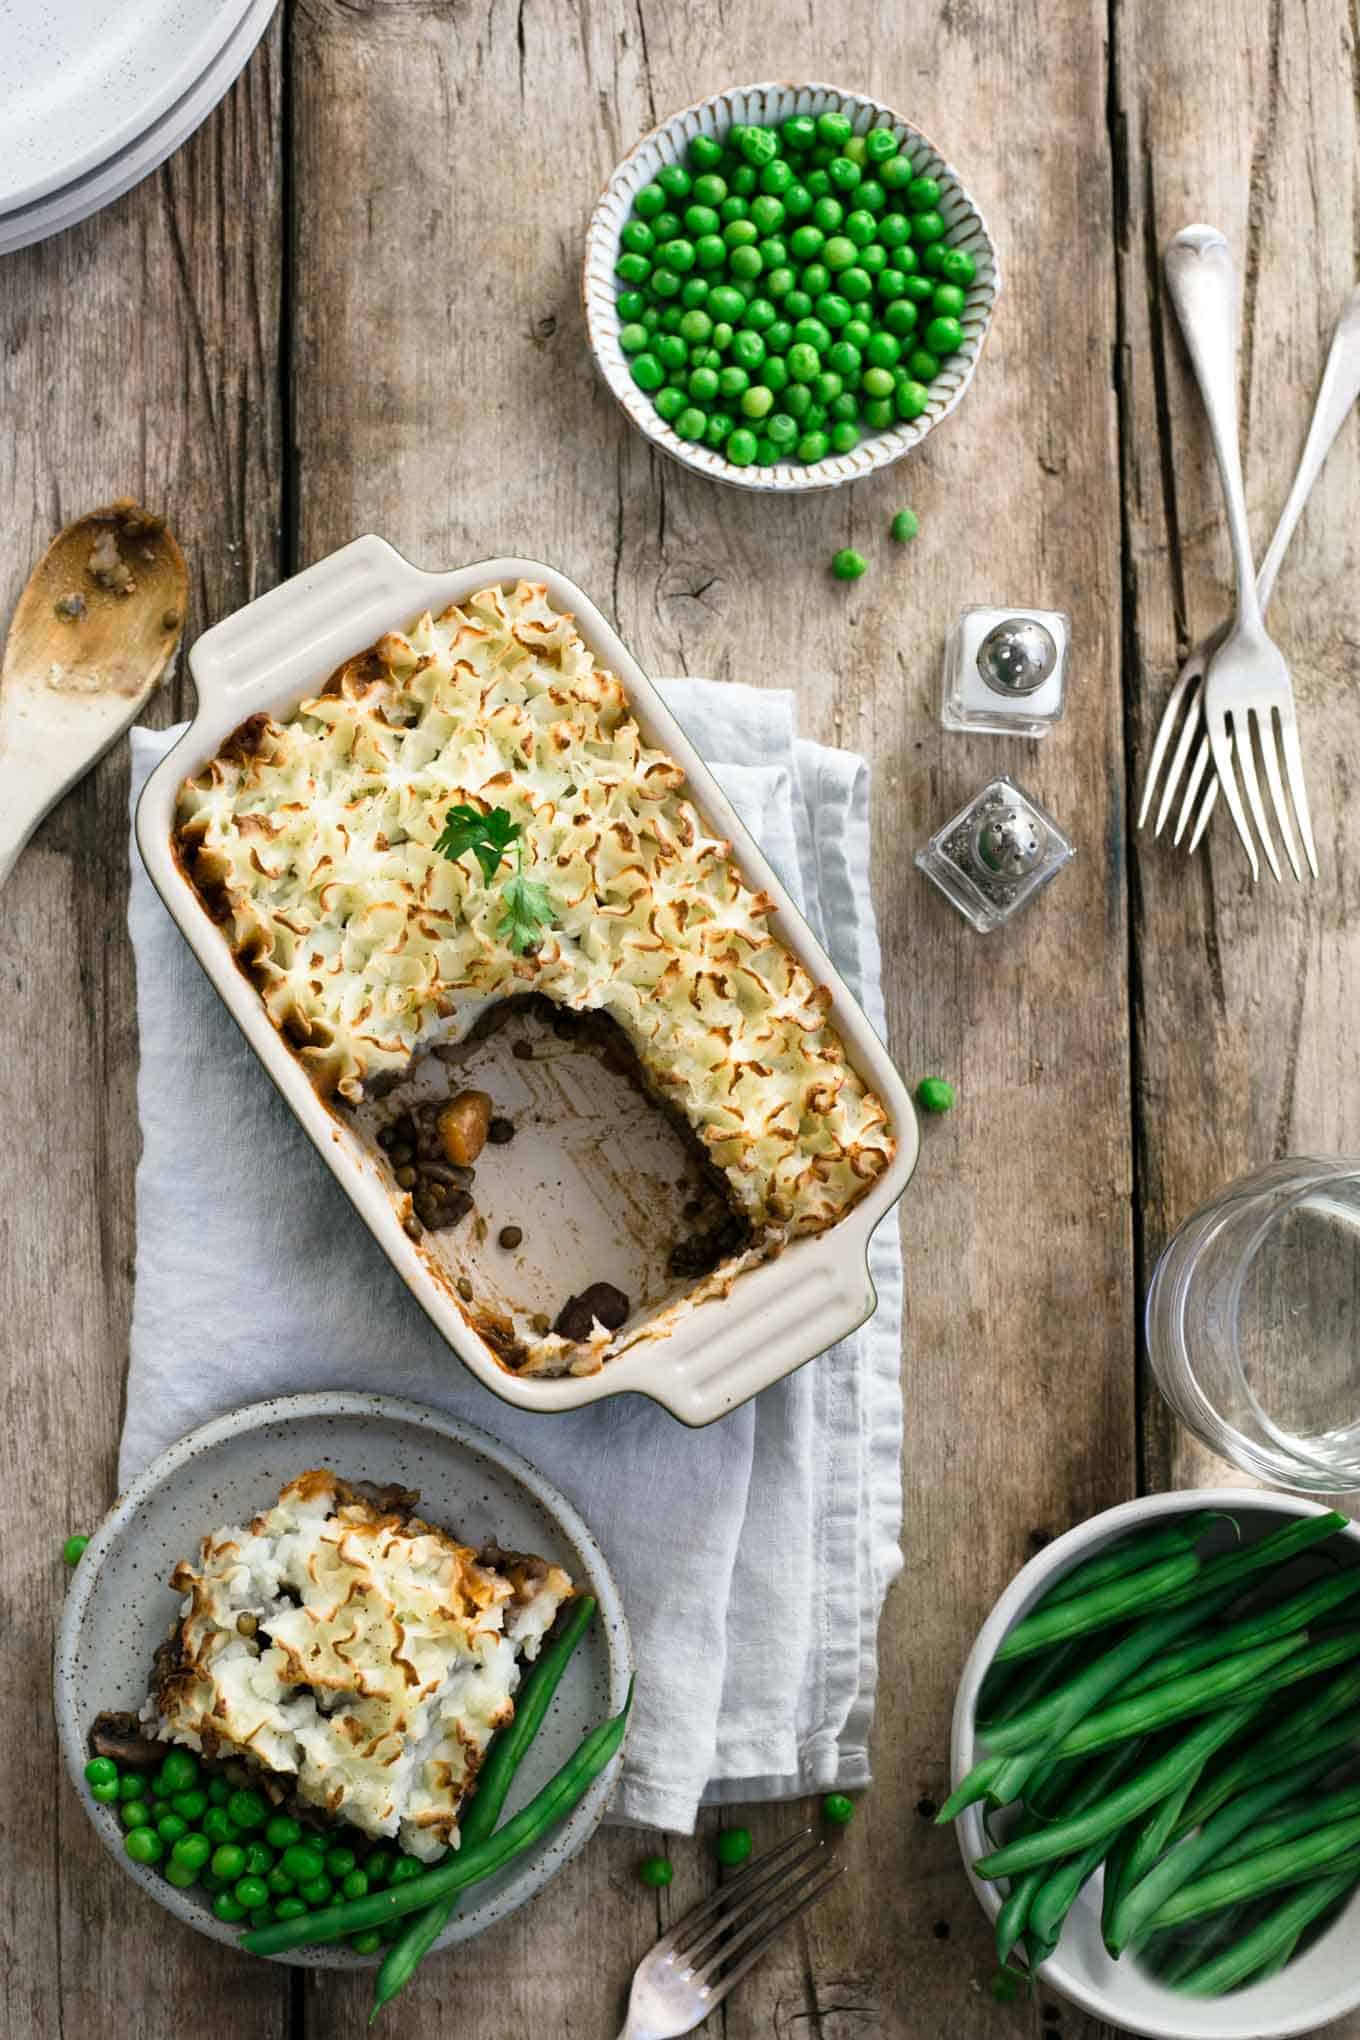 Vegan shepherd's pie with lentils. All-time favourite recipe for the whole family! #vegan #lentilpie #comfortfood | via @annabanana.co